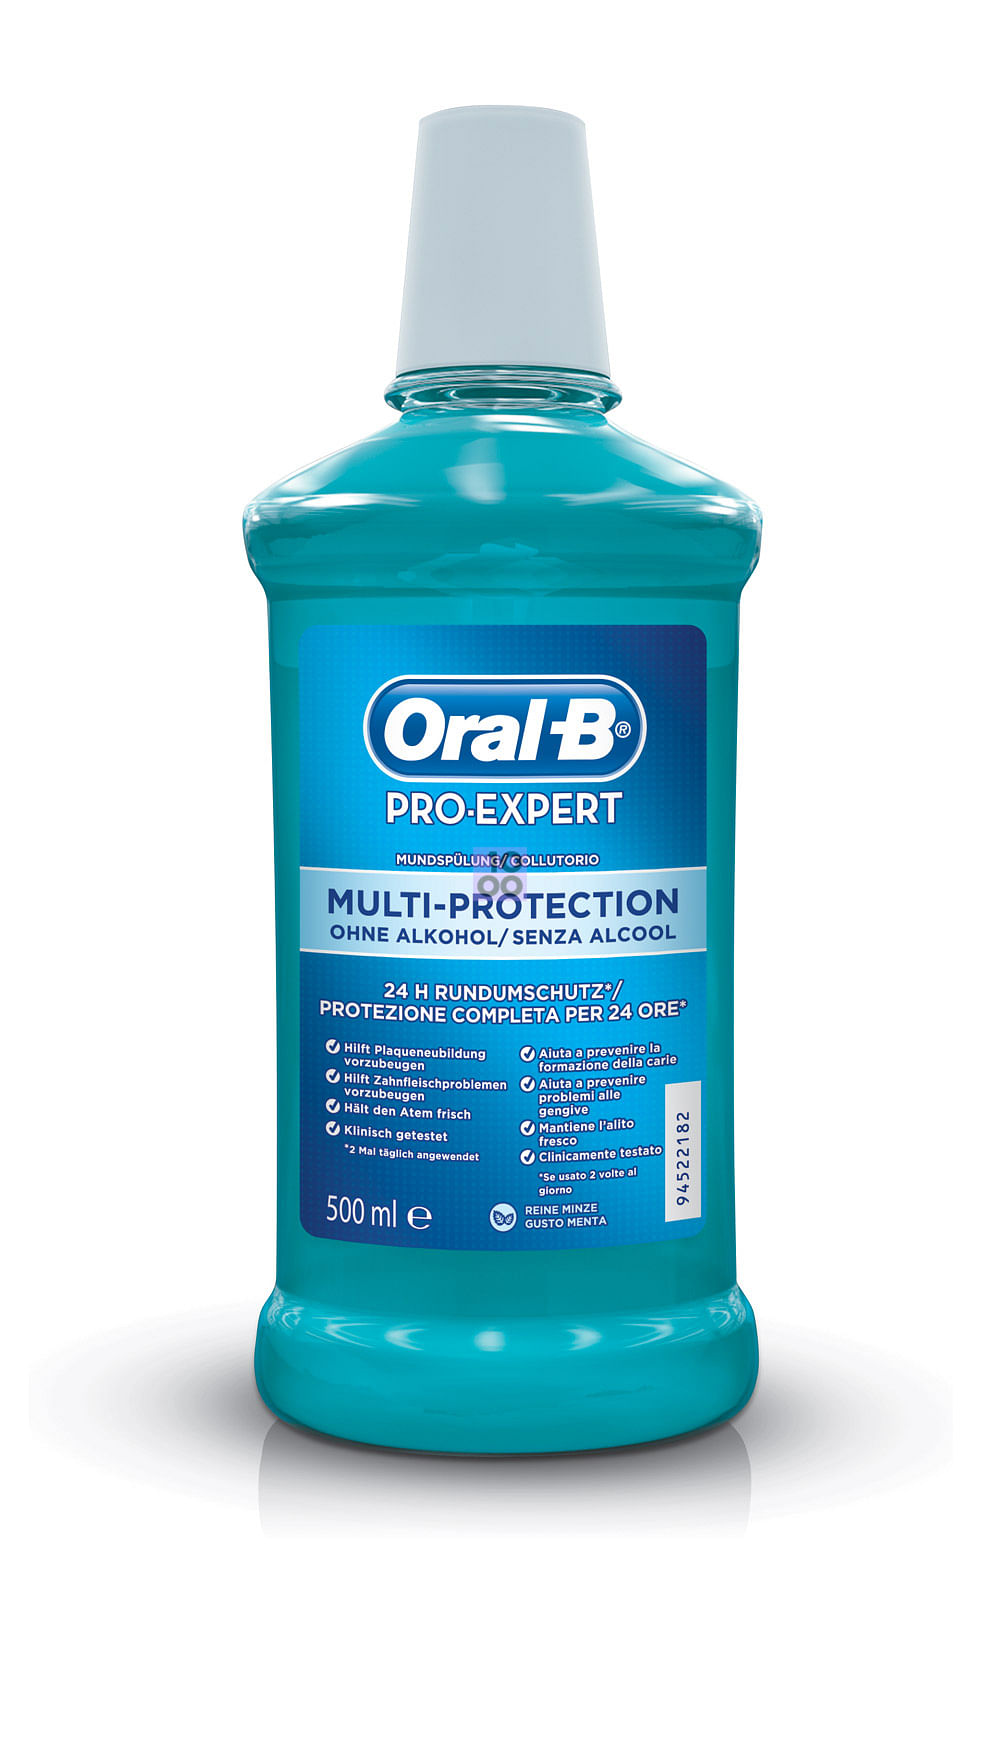 Oral-B Pro Expert Advanced Dentifricio Sbiancante 75 ml